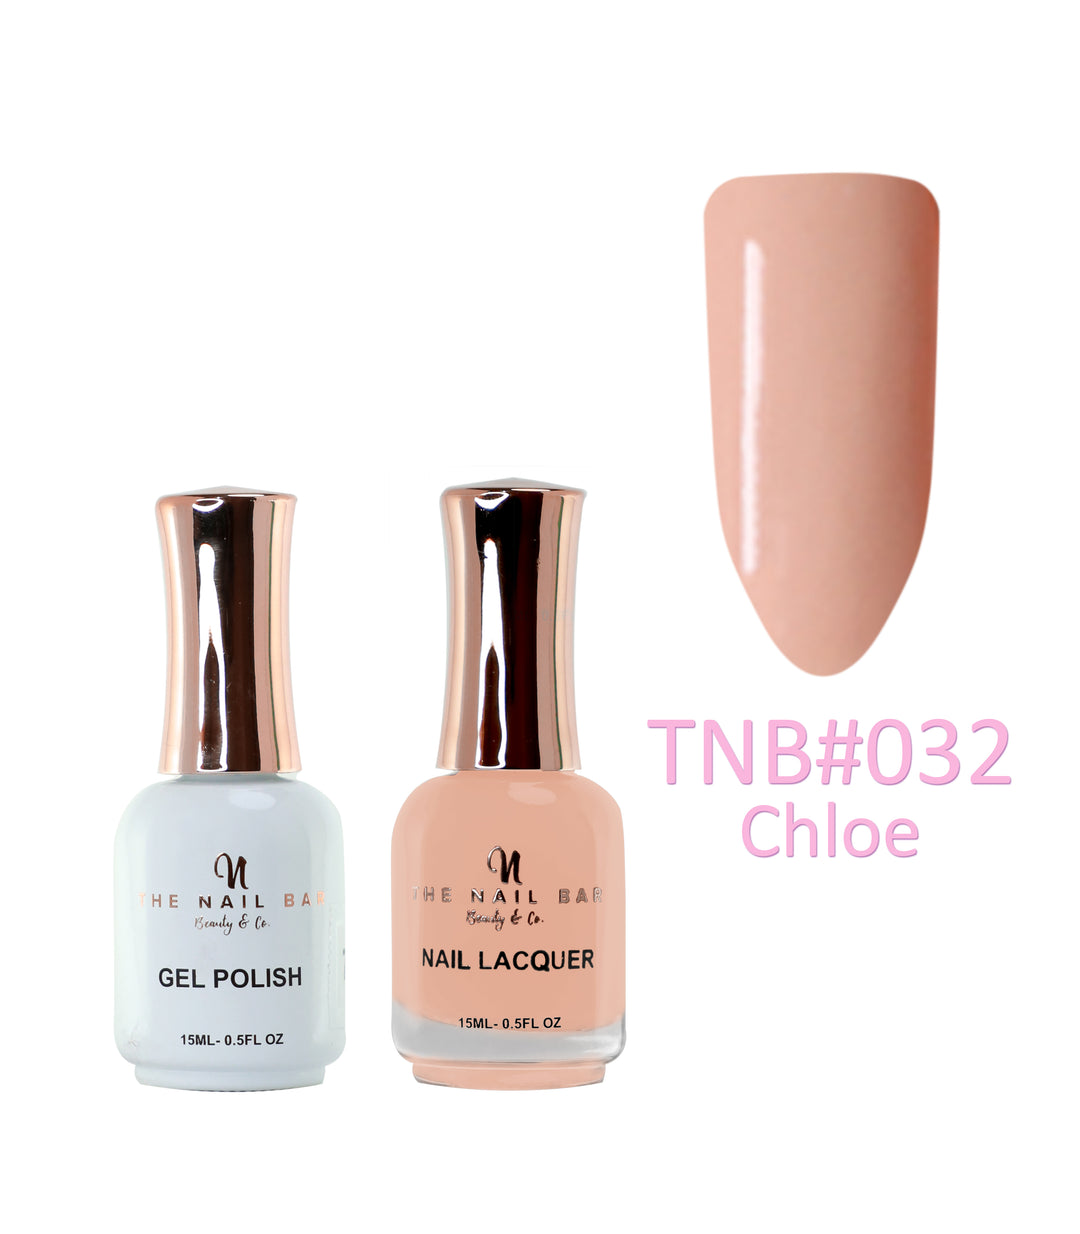 Dual Polish/Gel colour matching (15ml) - Chloe - The Nail Bar Beauty & Co.